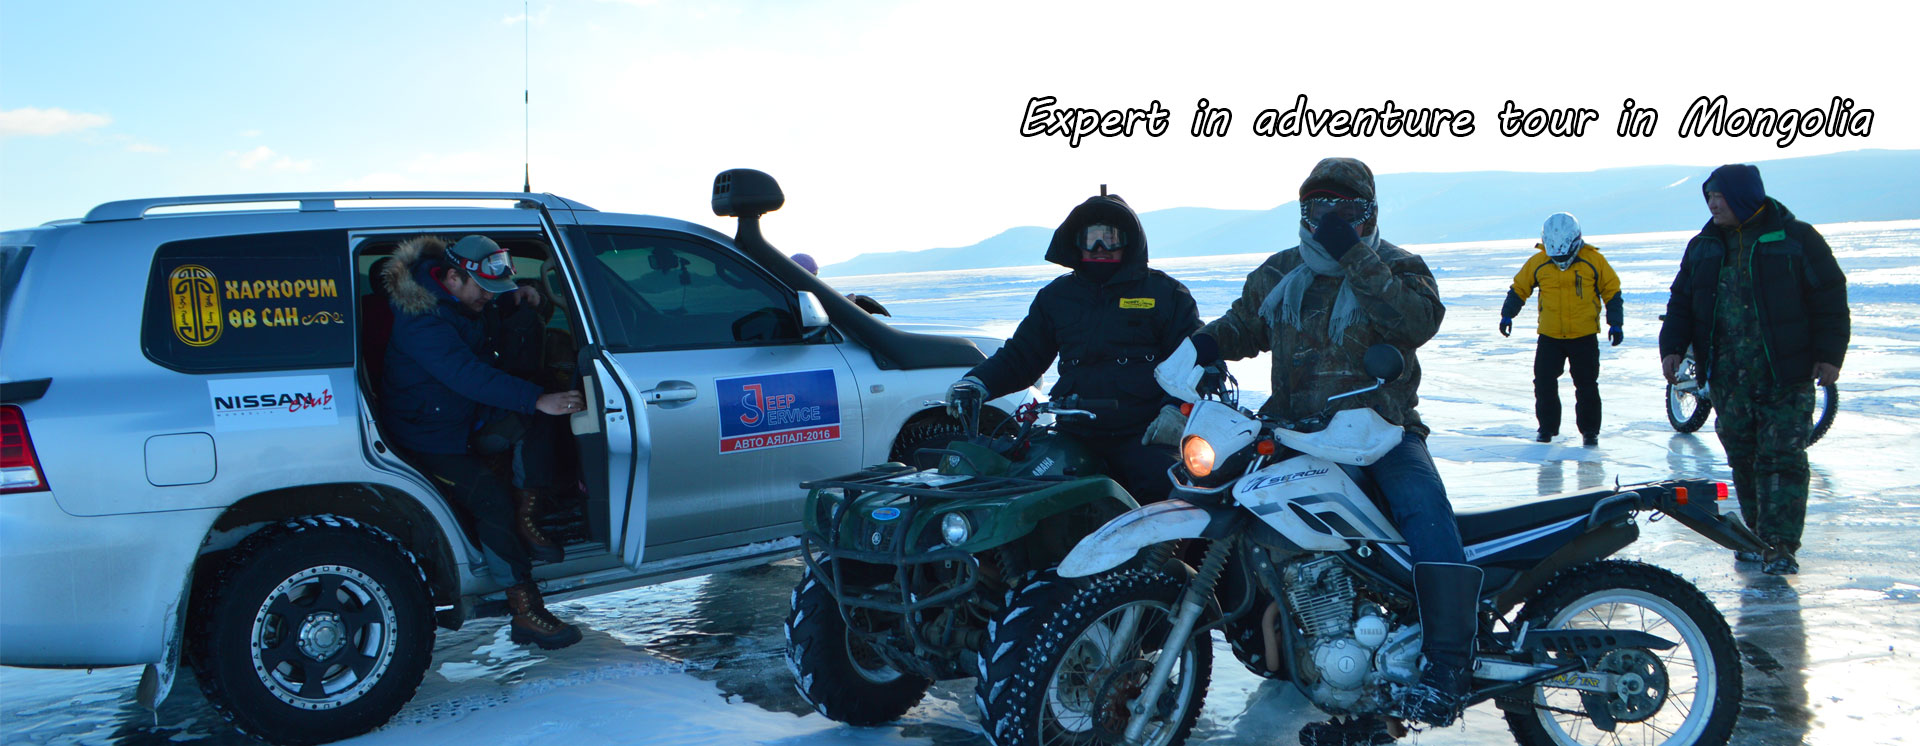 motorcycle-tour-on-ice-.jpg